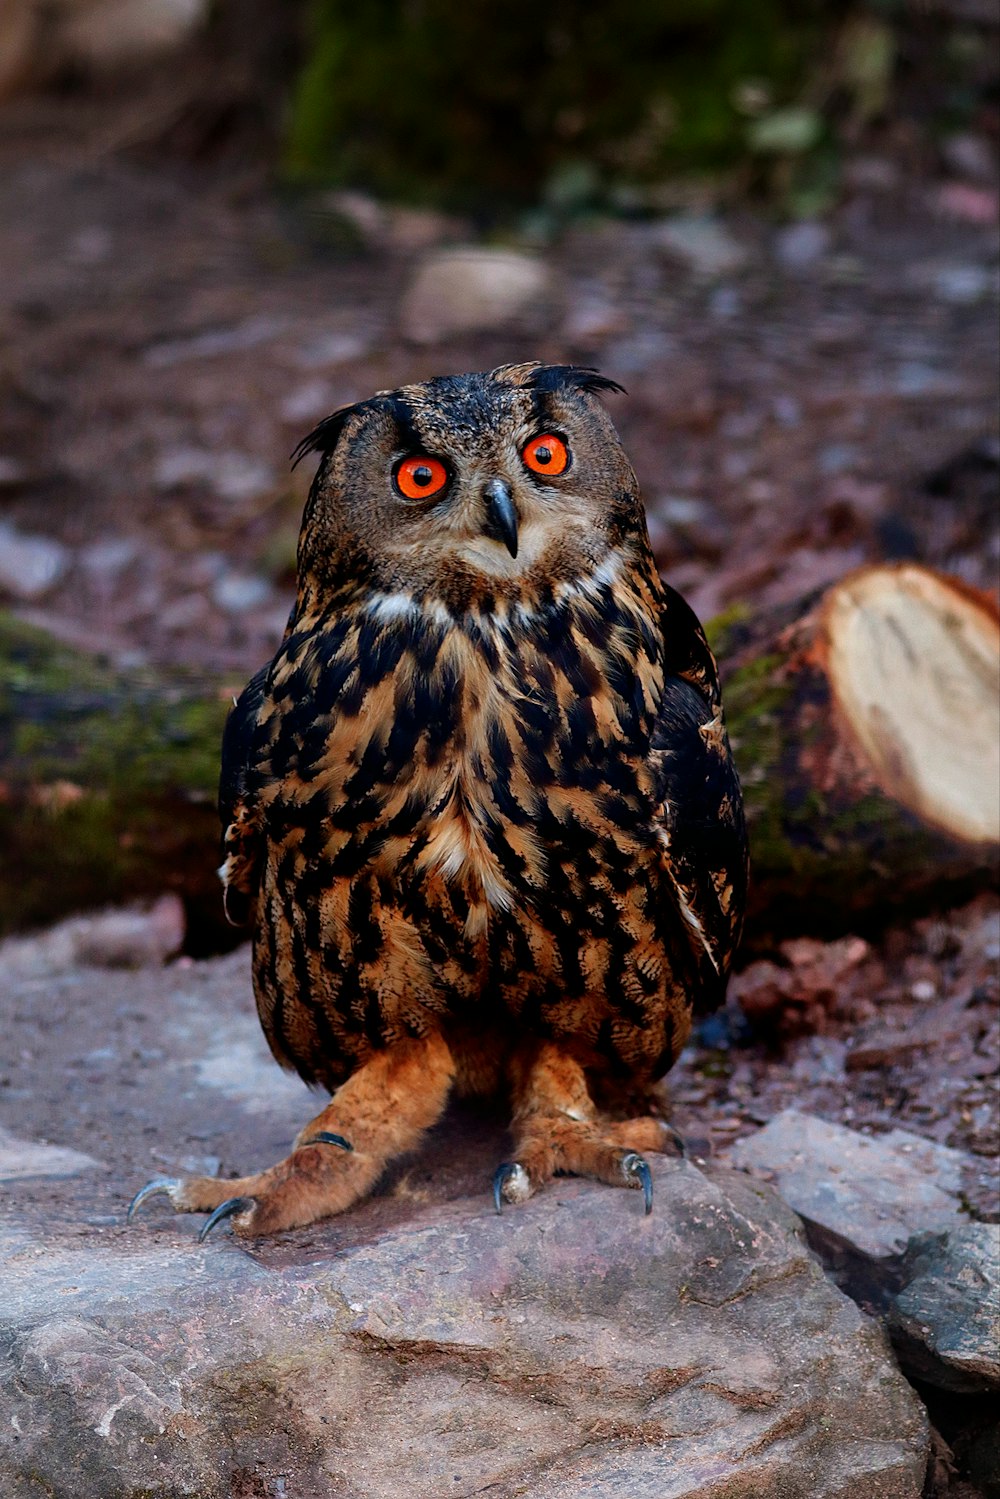 an owl with orange eyes sitting on a rock